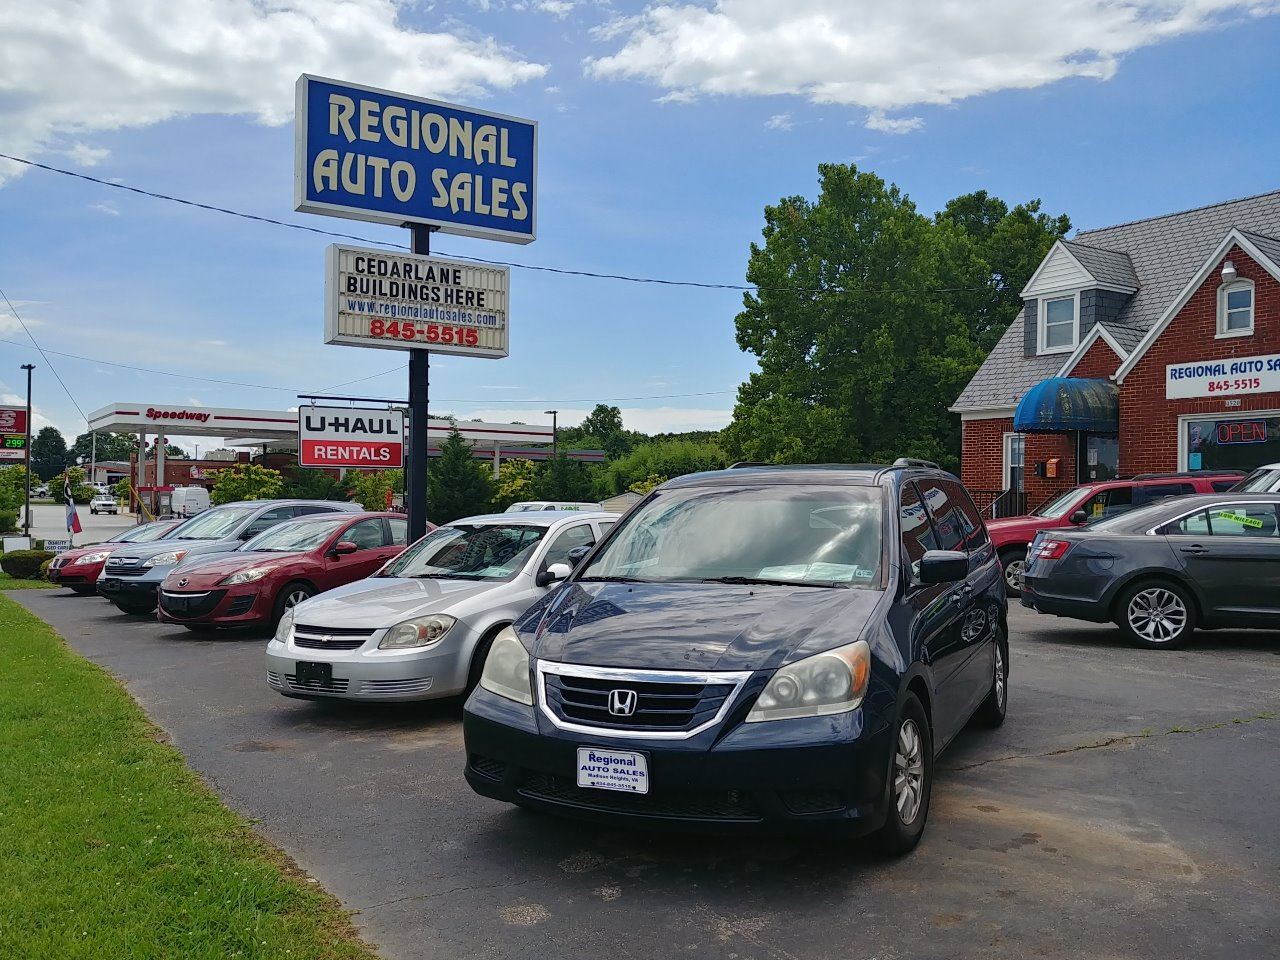 Regional Auto Sales